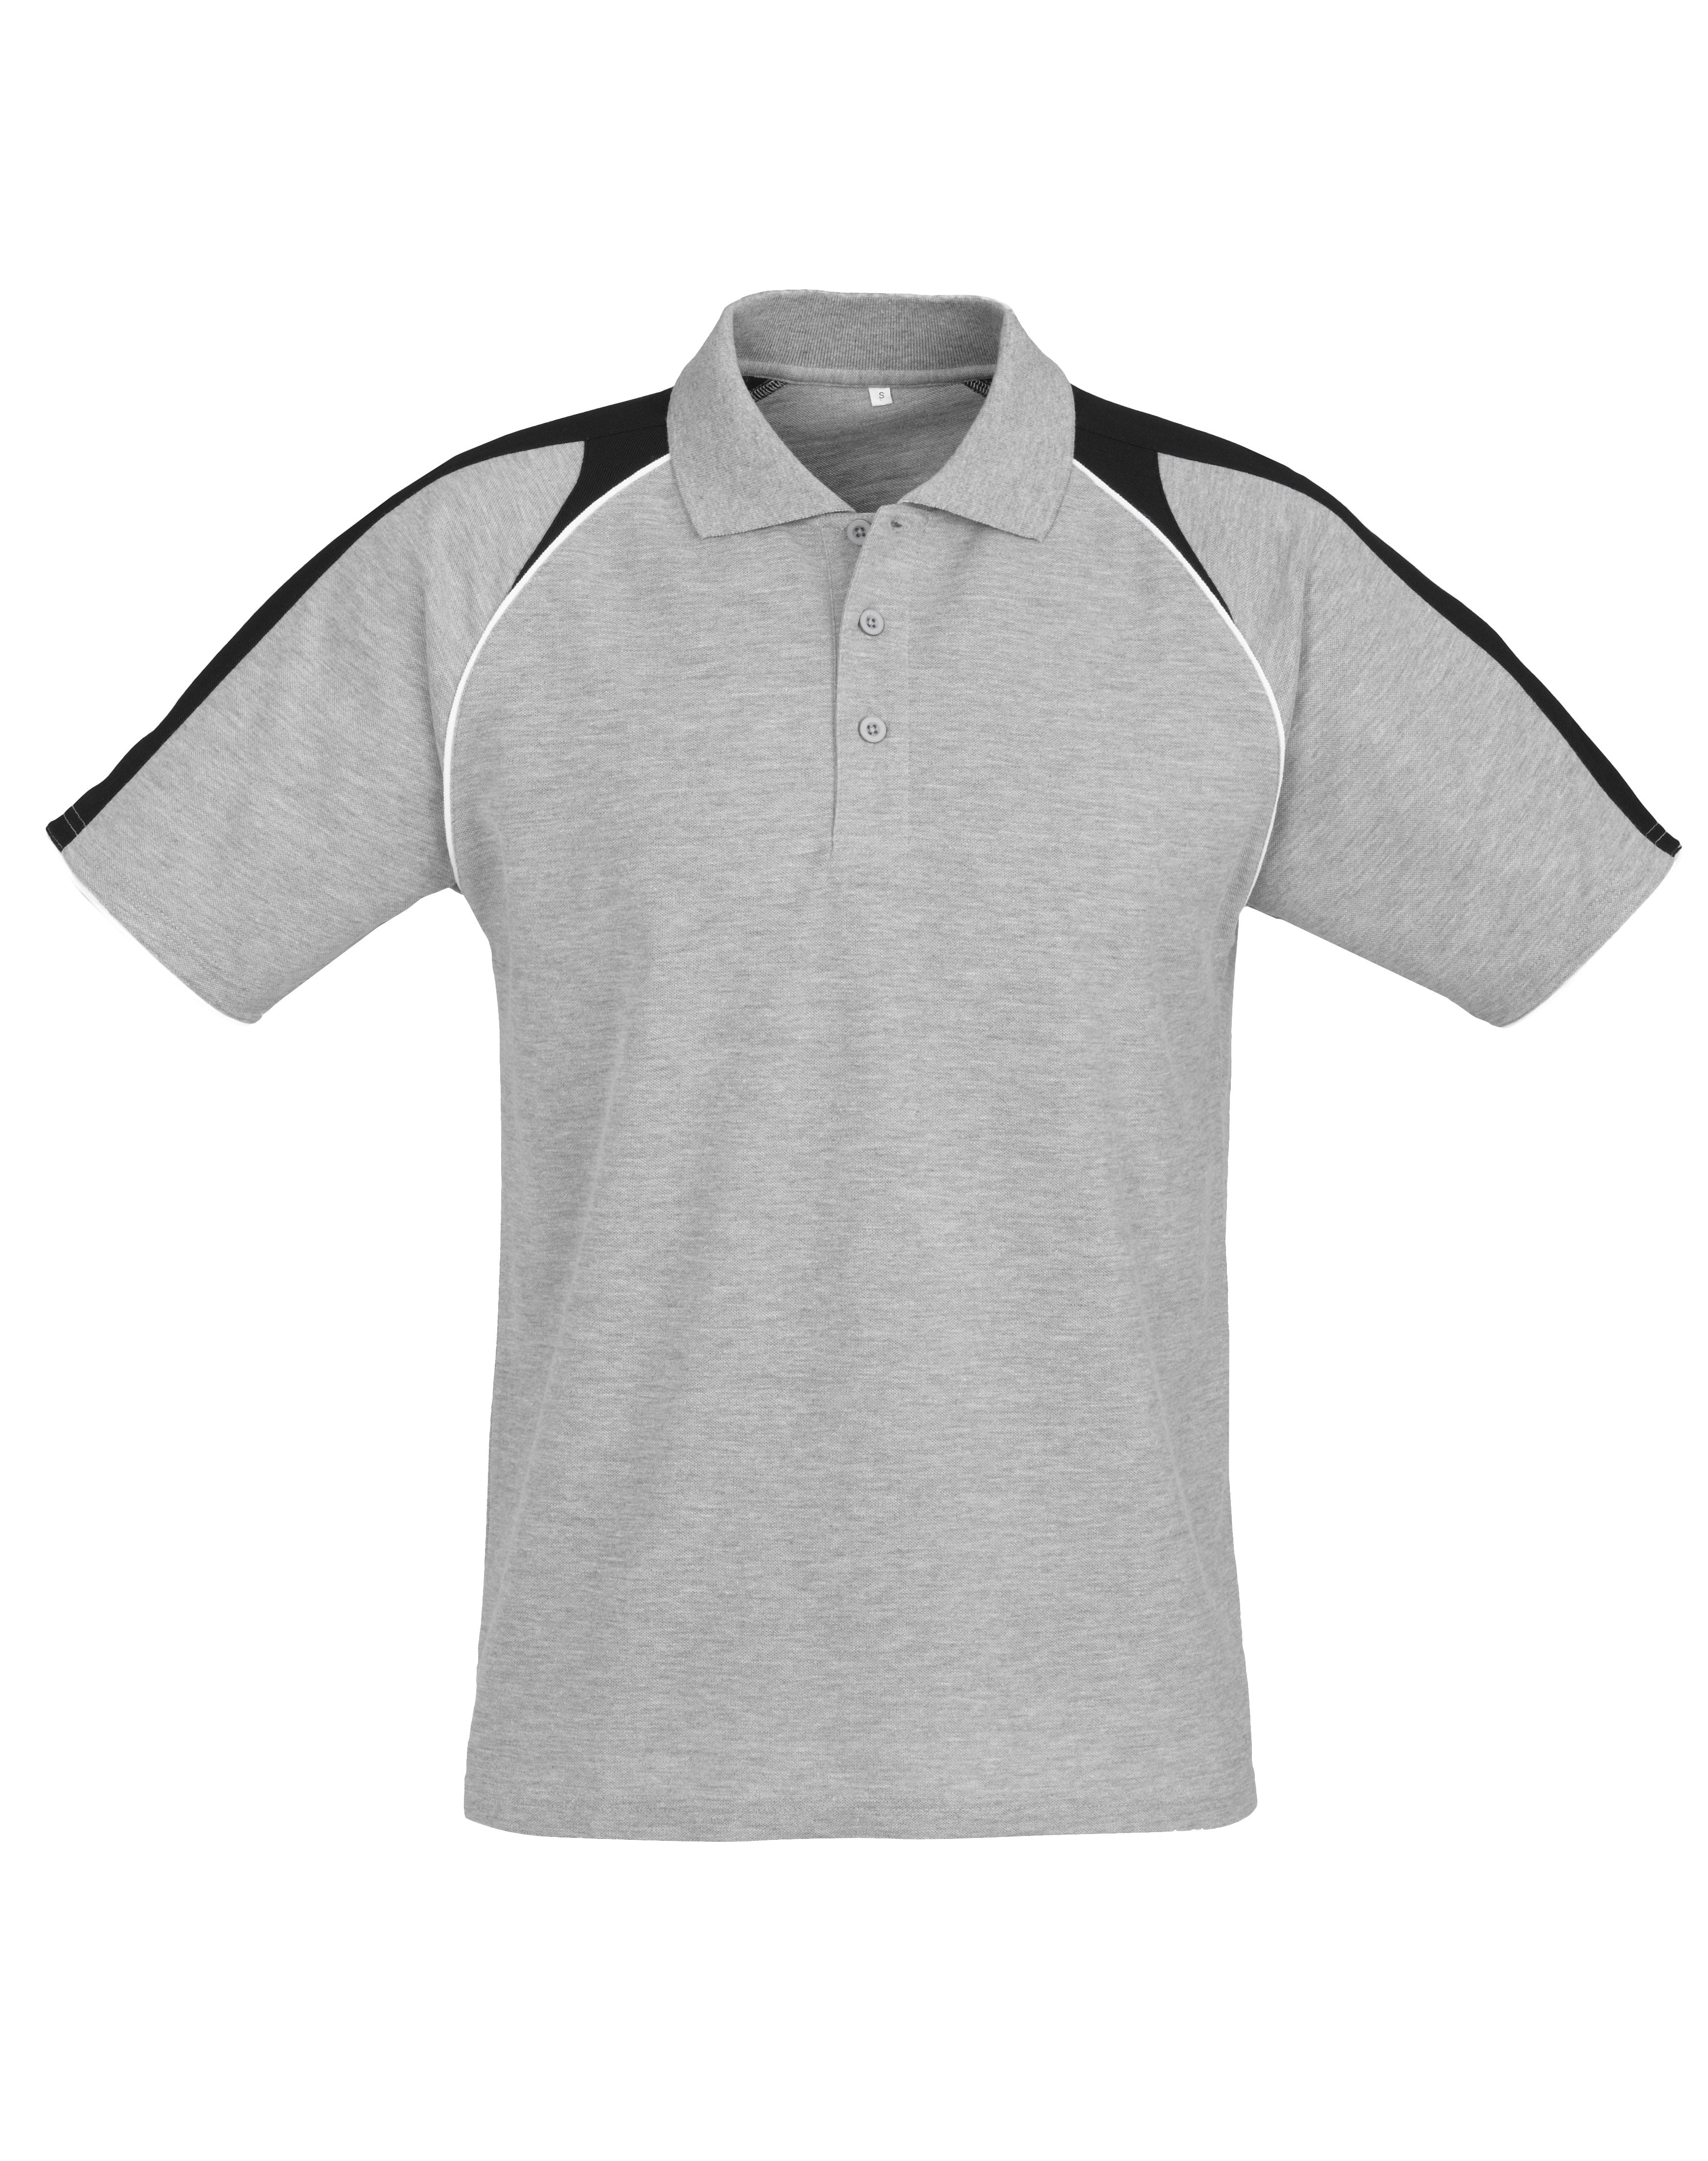 Mens Triton Golf Shirt - Black Teal Only-Shirts & Tops-2XL-Grey-GY